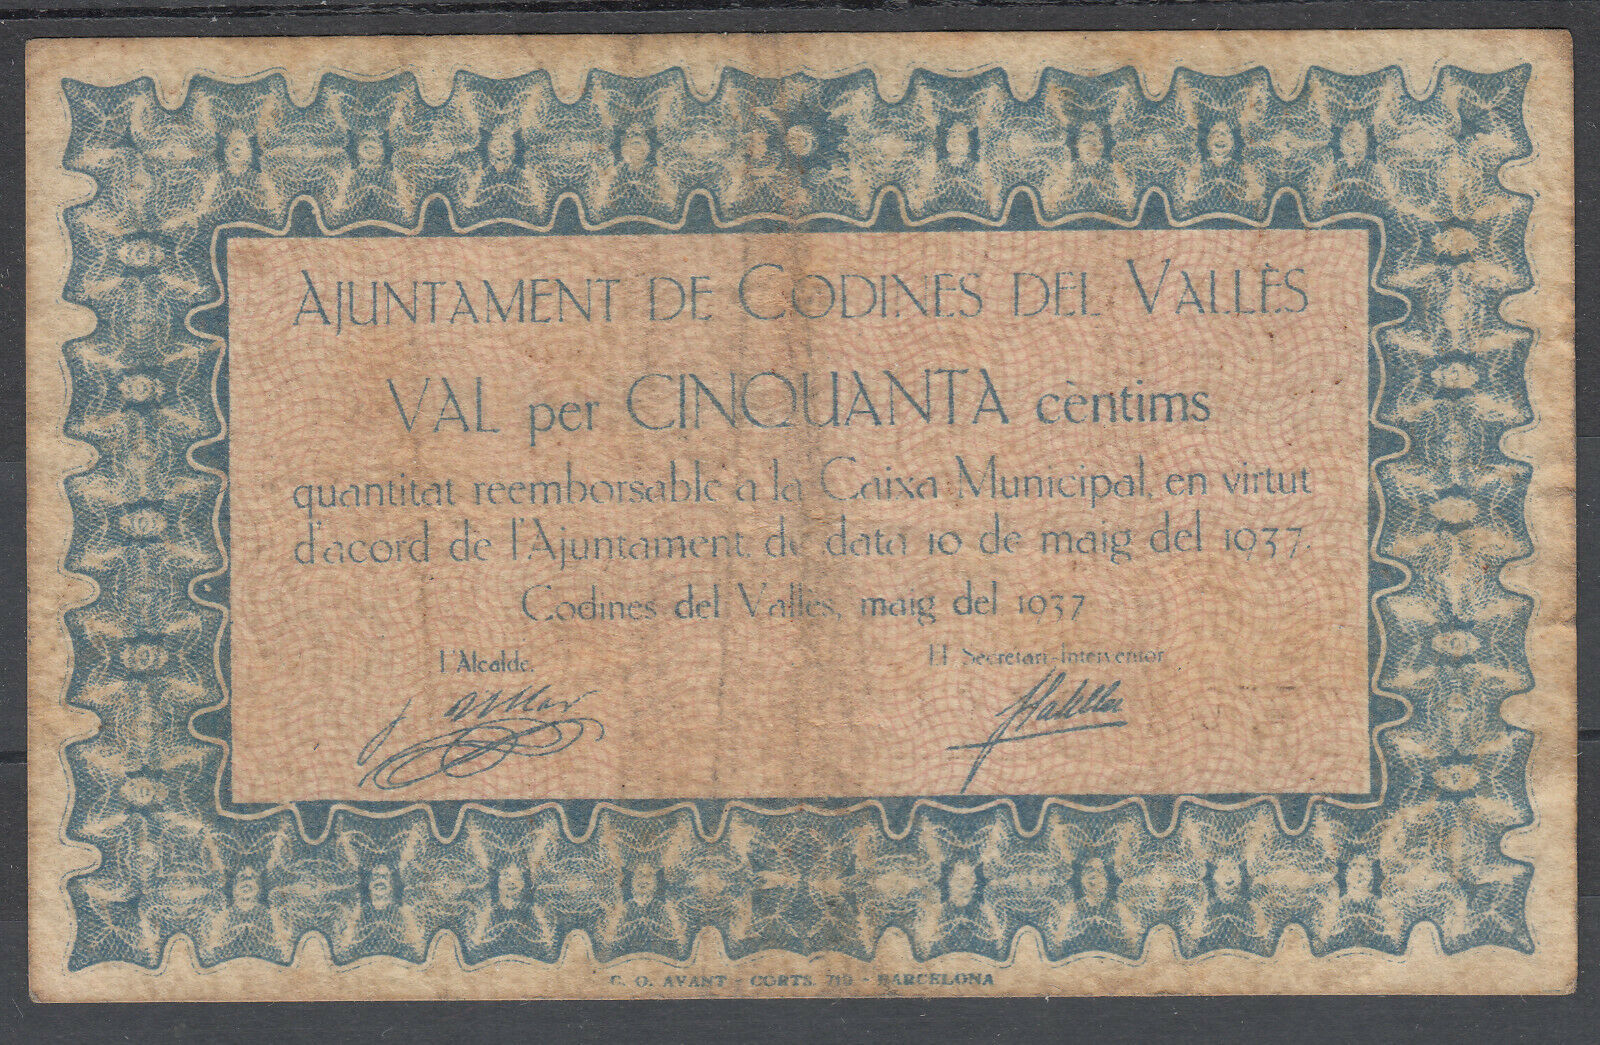 BANKNOTE LOCAL - CODINES DEL VALLES - 50 CENTIMOS - AÑO 1937 BILL0003c_CODINES